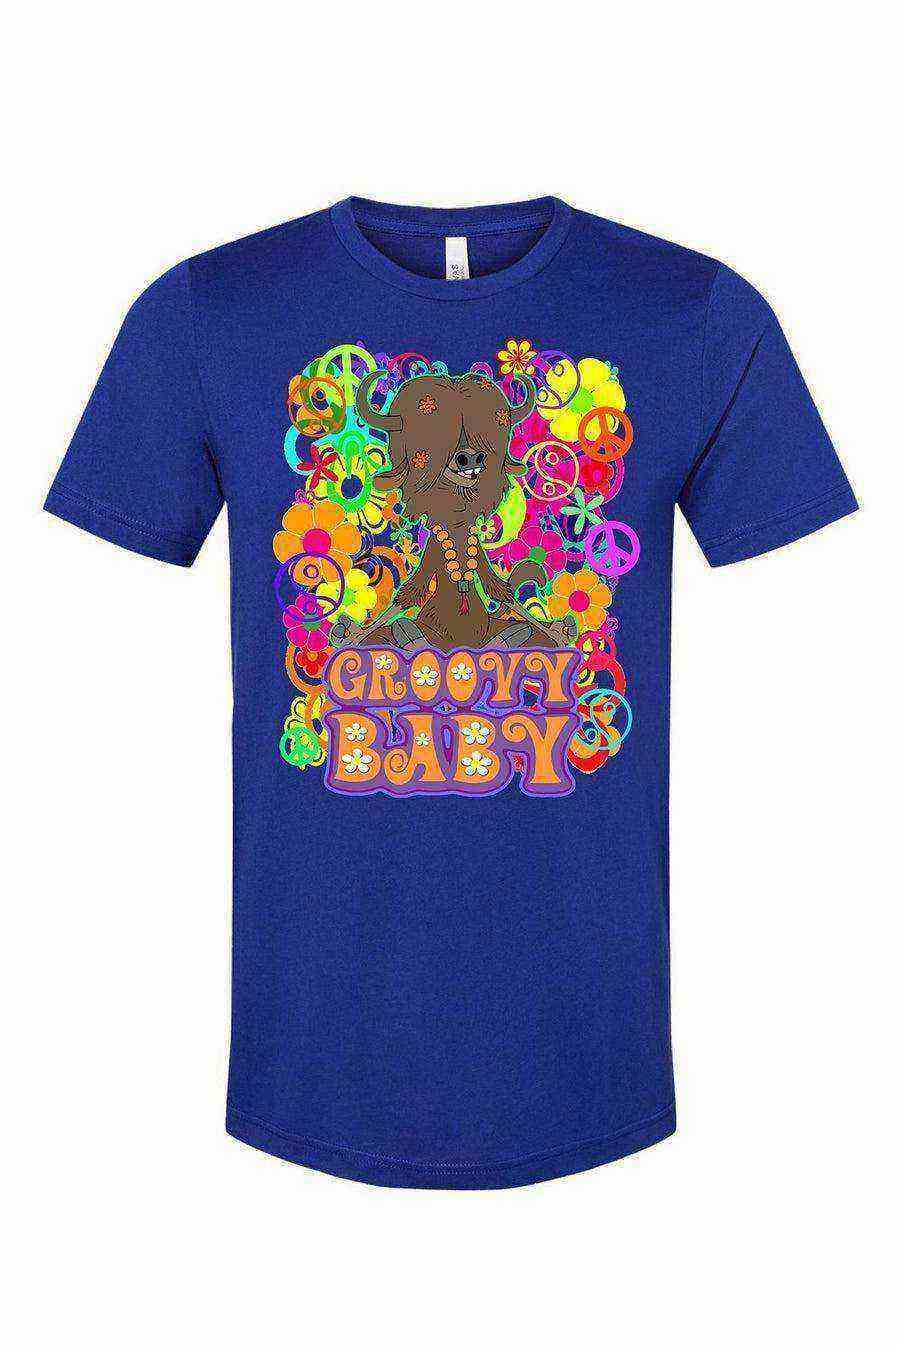 Womens | Groovy Yak Yax Shirt | Zootopia Shirt - Dylan's Tees